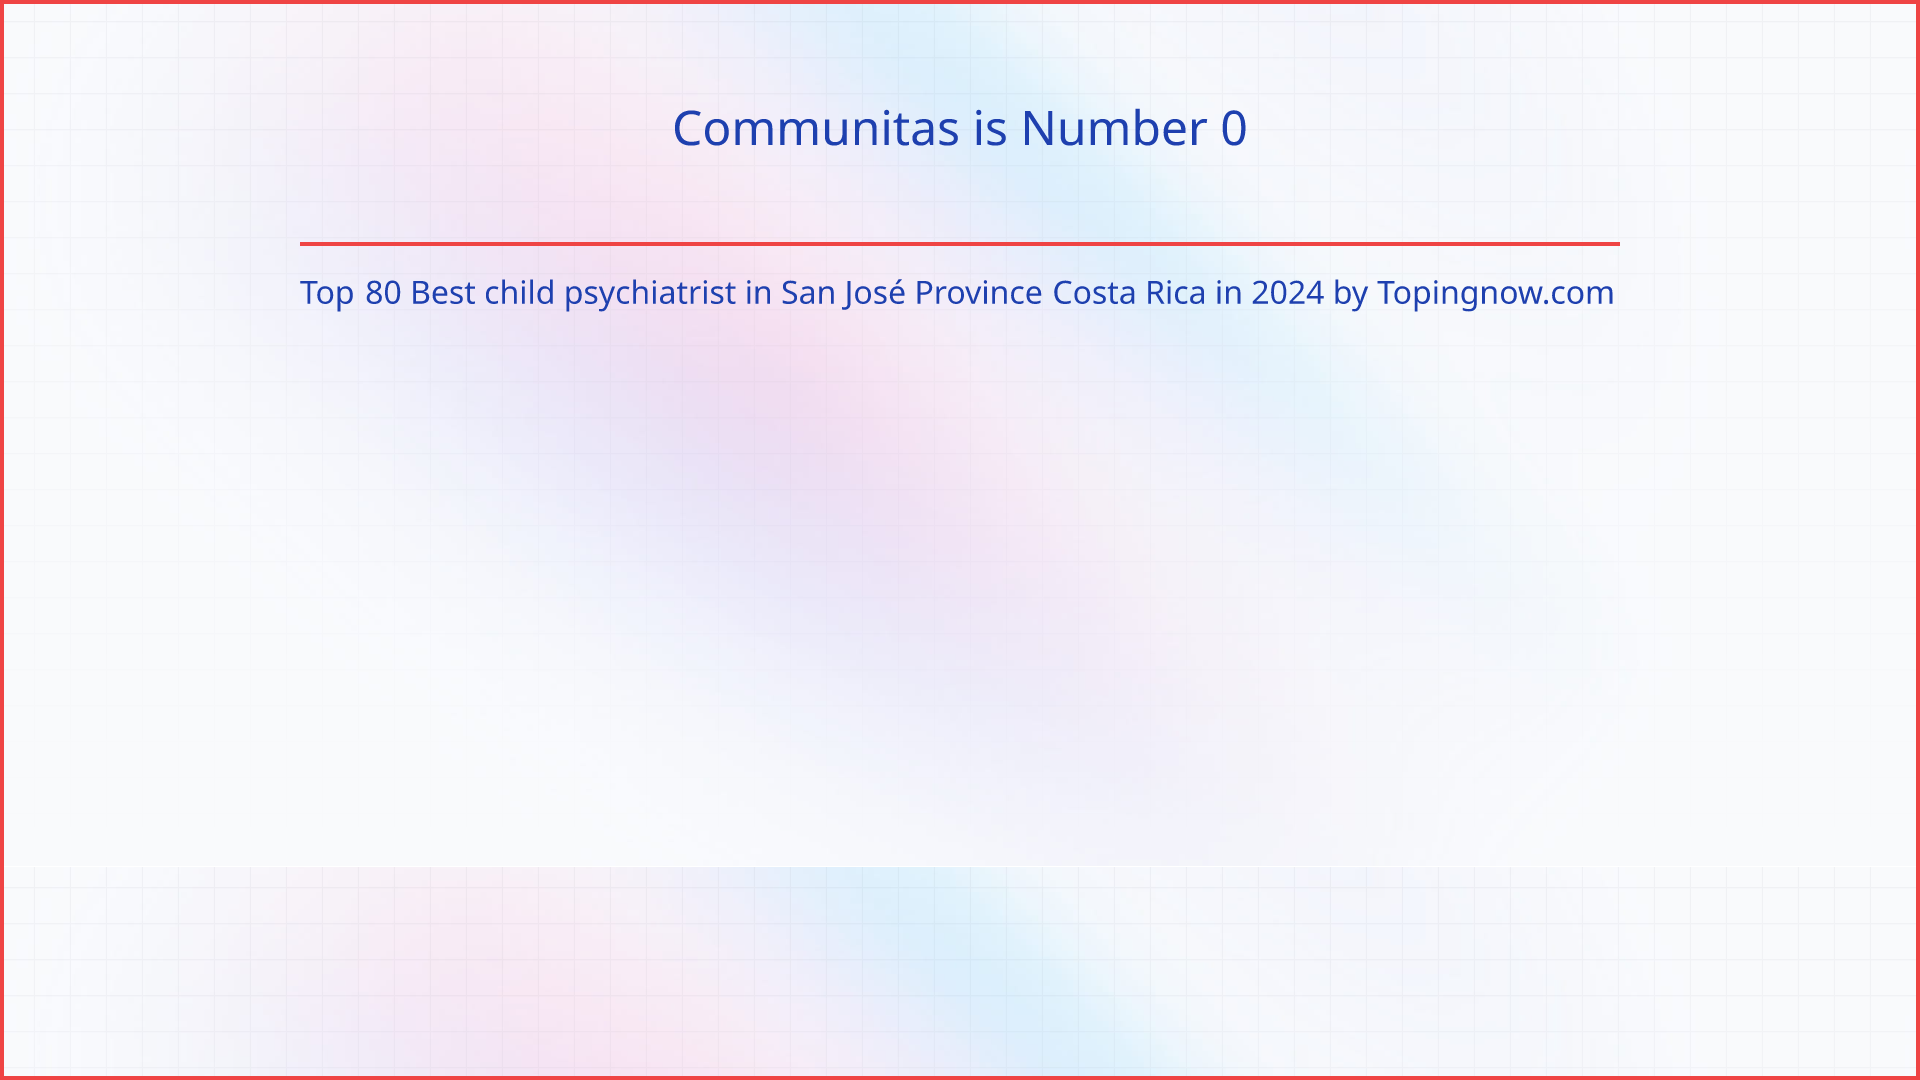 Communitas: Top 80 Best child psychiatrist in San José Province Costa Rica in 2024